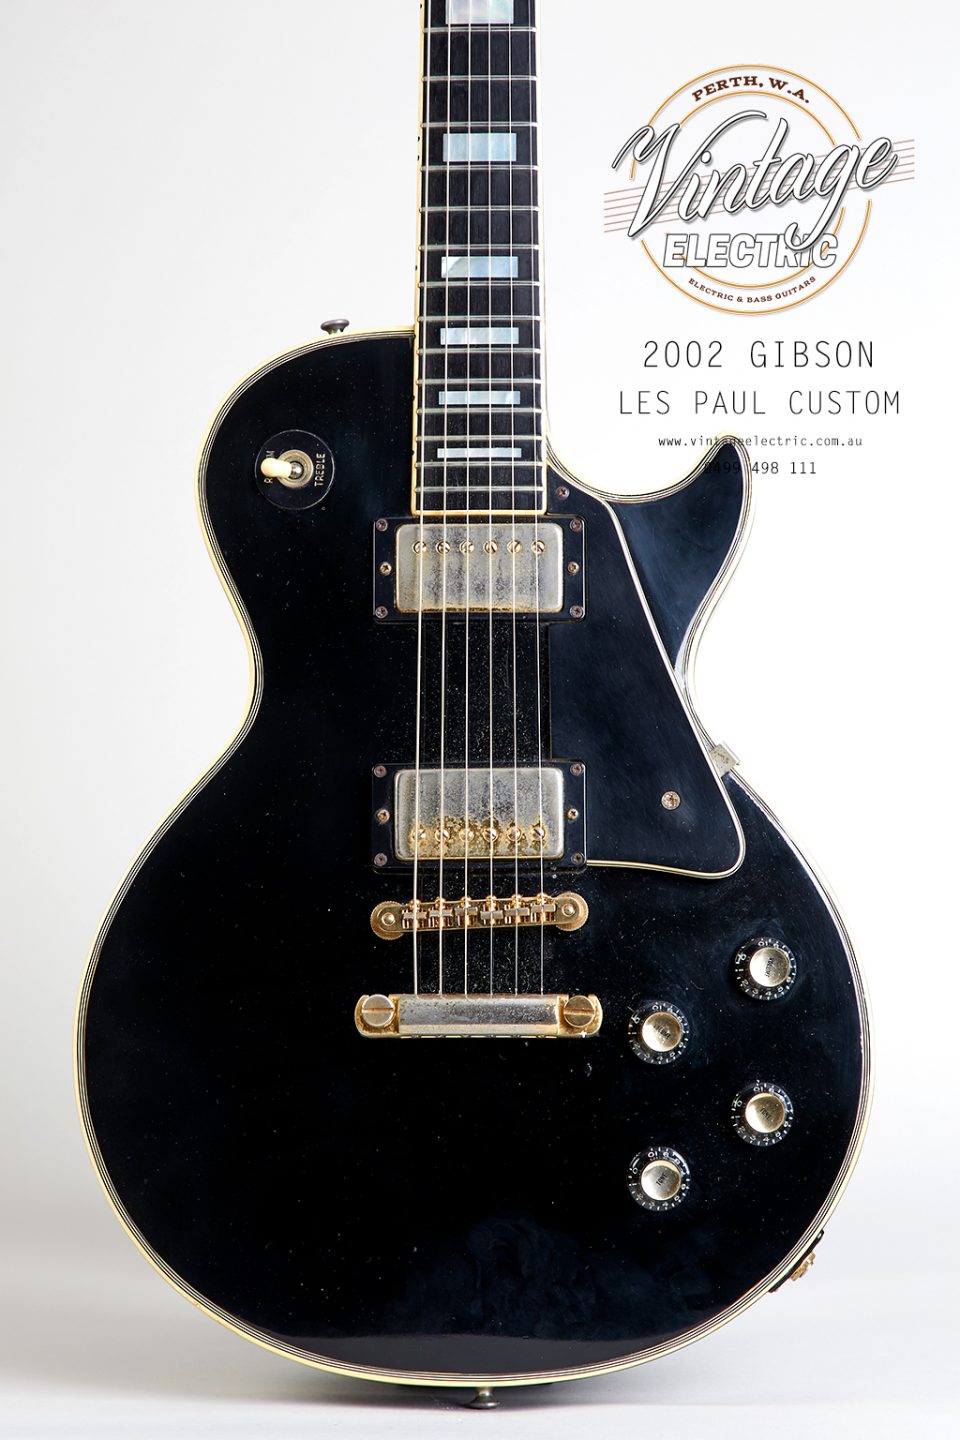 2002 Gibson Les Paul Custom Body